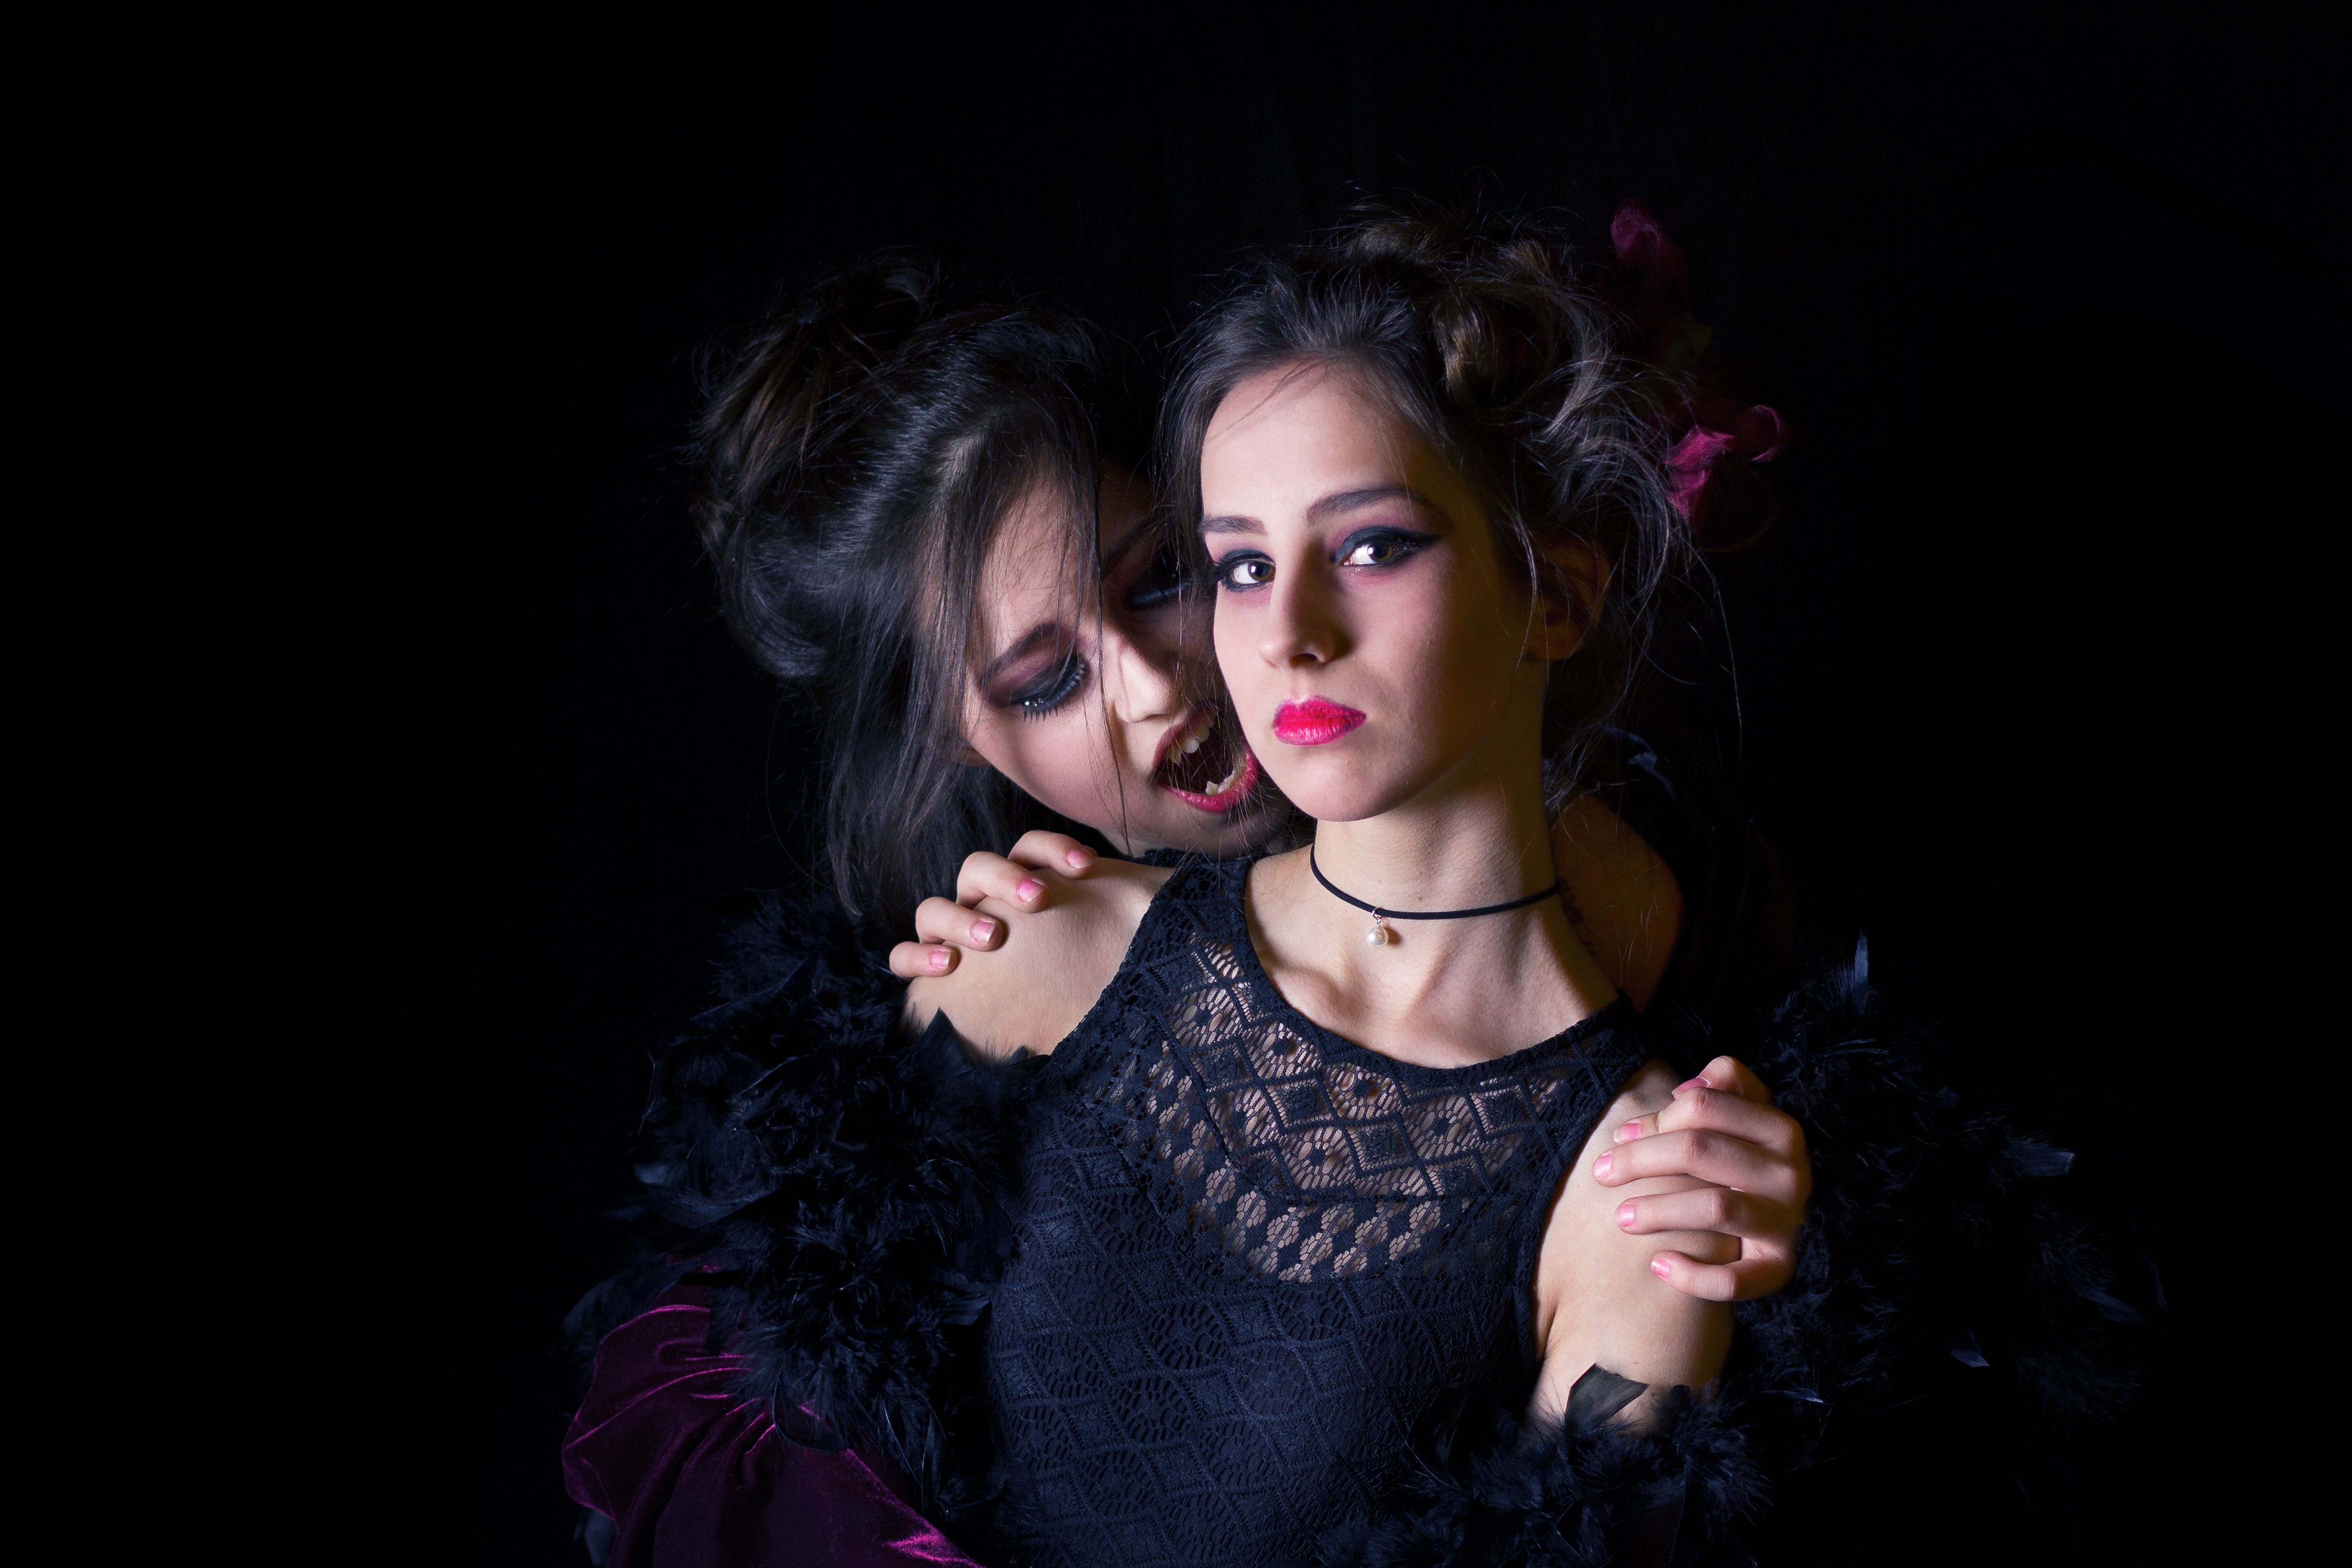 Women Portrait Black Clothing Two Women Brunette Makeup Red Lipstick Open Mouth Biting Choker Black  4746x3164